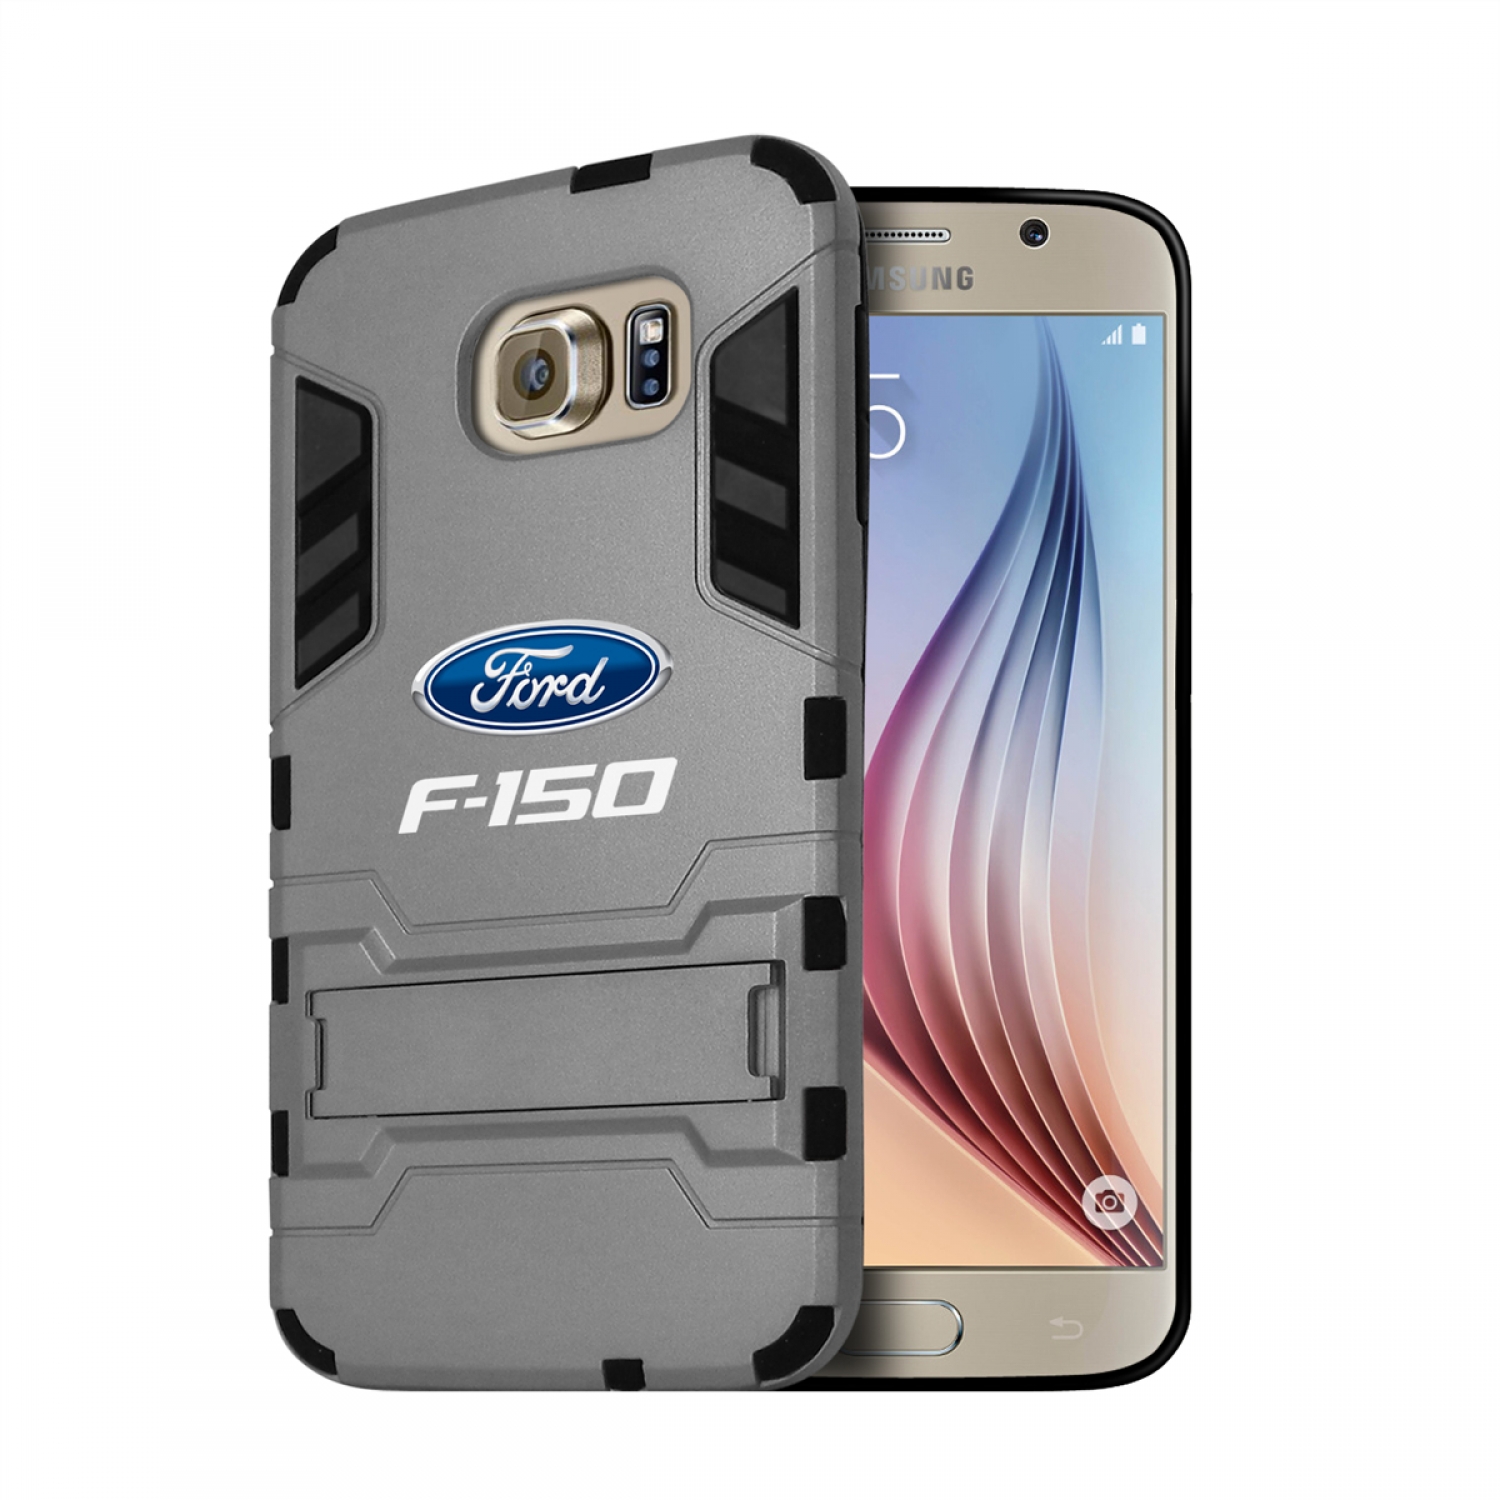 Ford F-150 Samsung Galaxy S6 Shockproof TPU ABS Hybrid Gray Phone Case